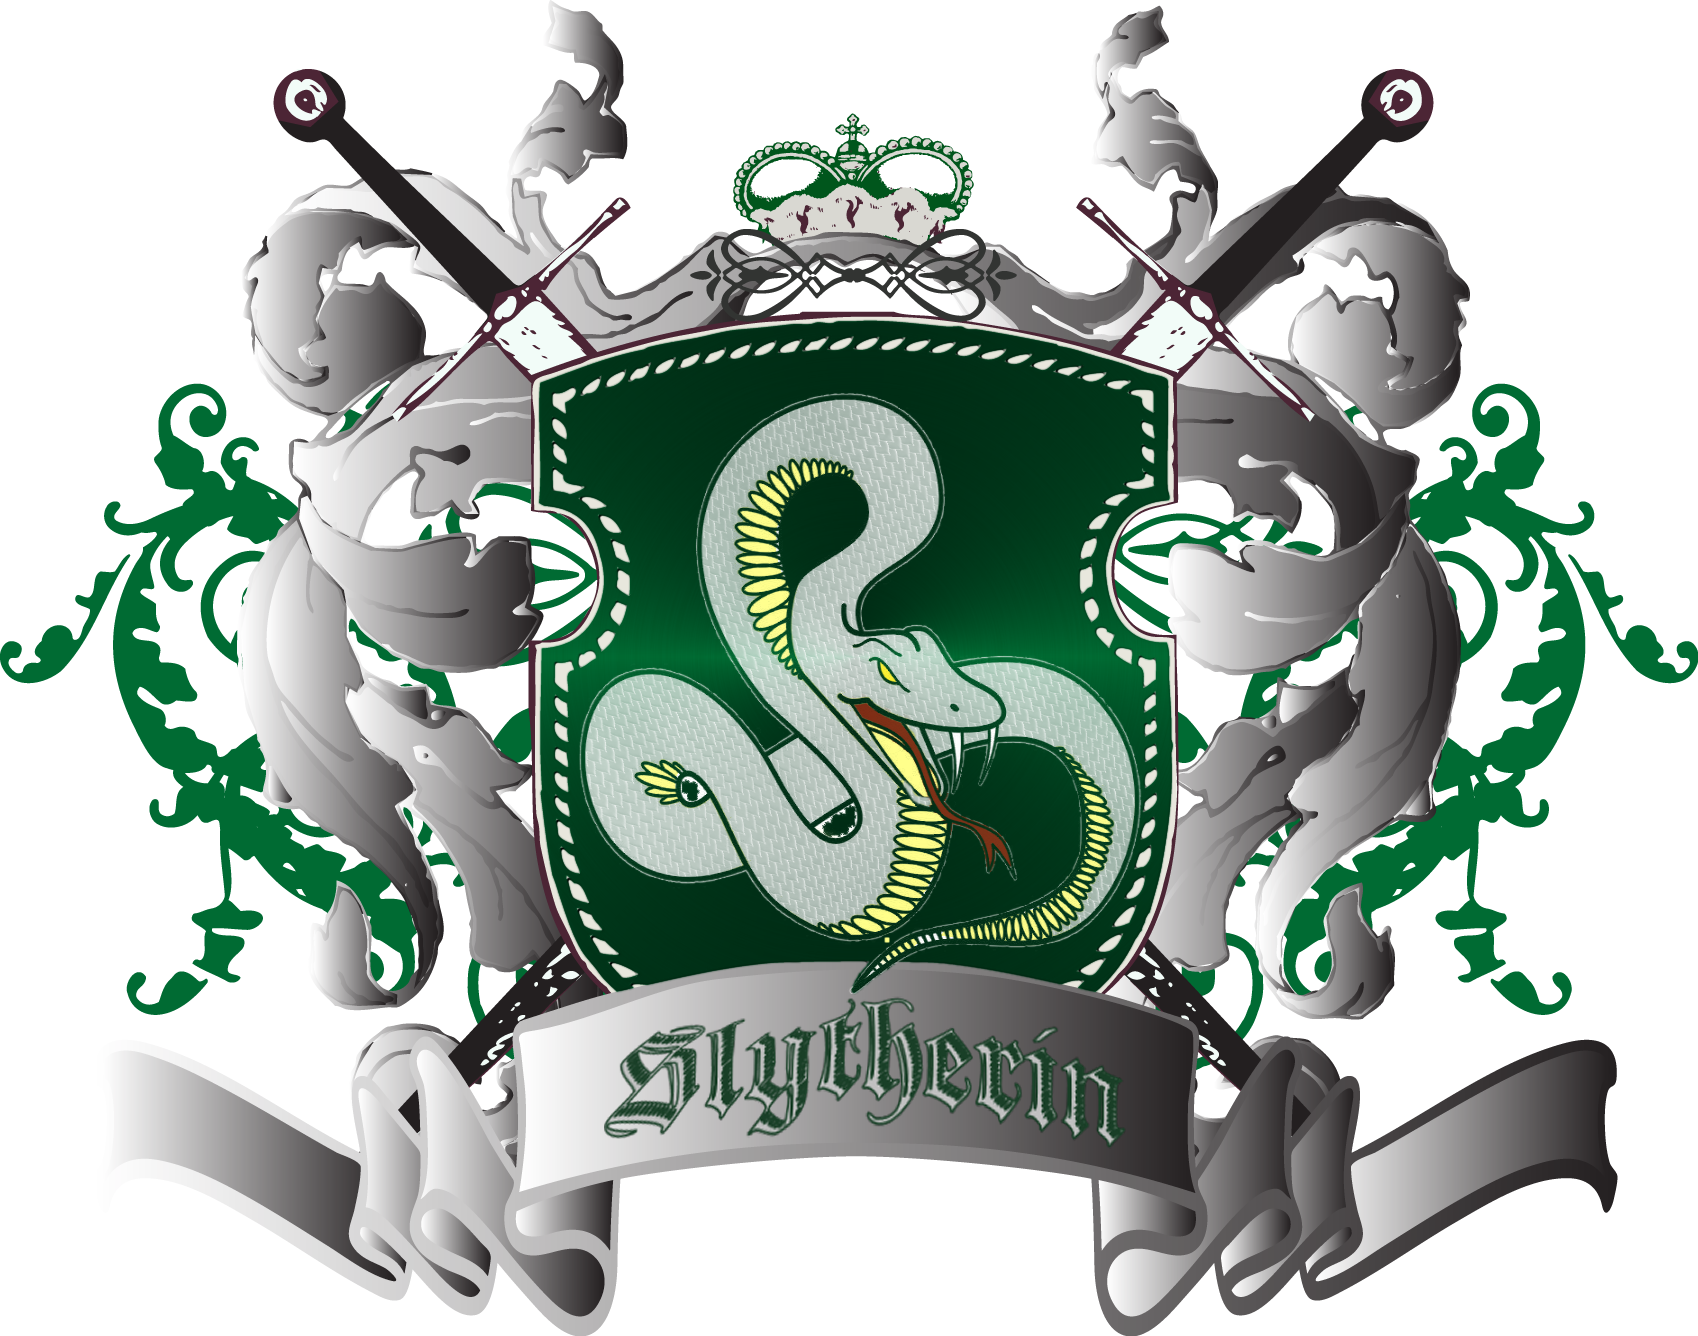 Slytherin Crest (1698x1336)